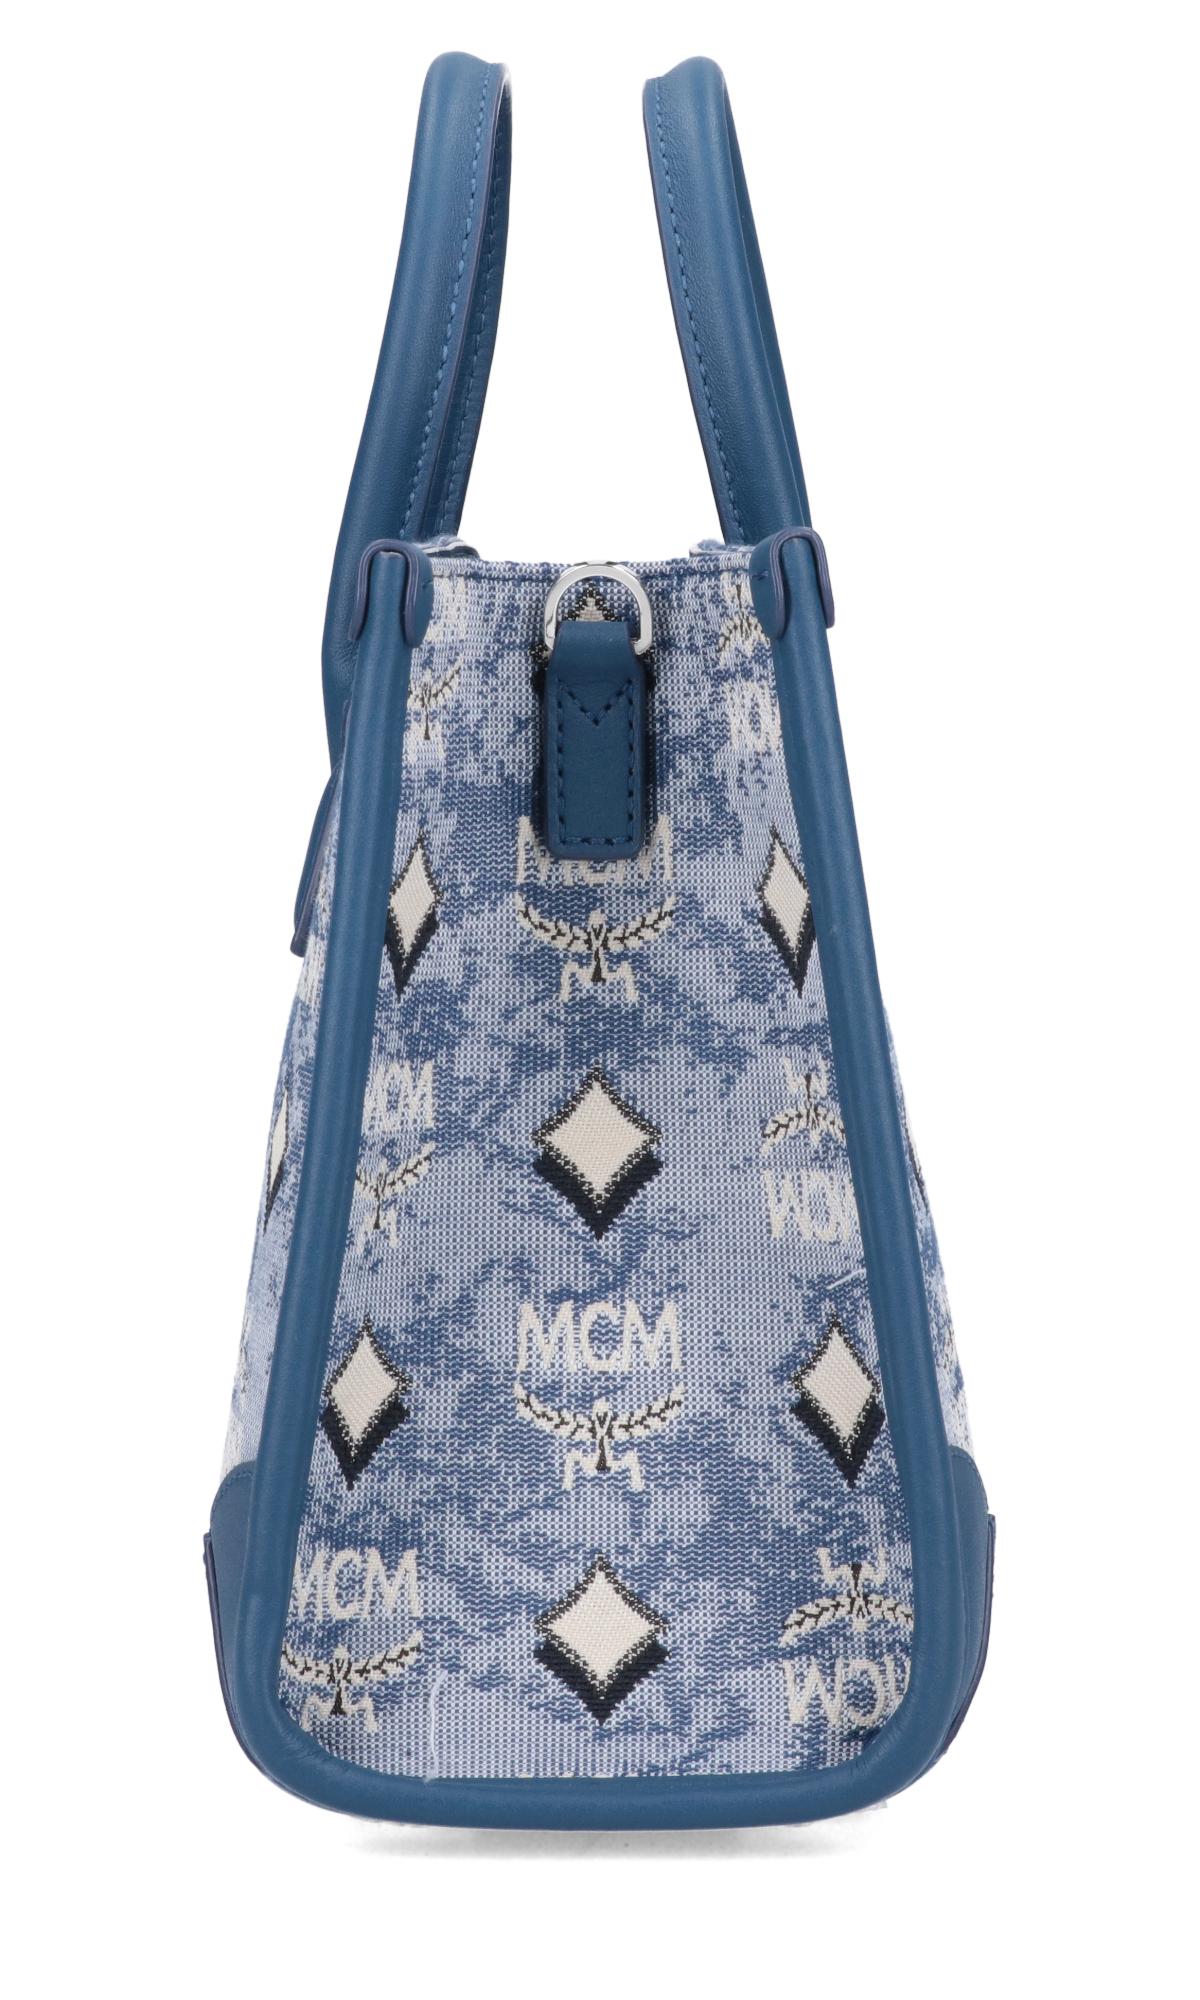 MCM small Munchen denim tote bag - ShopStyle